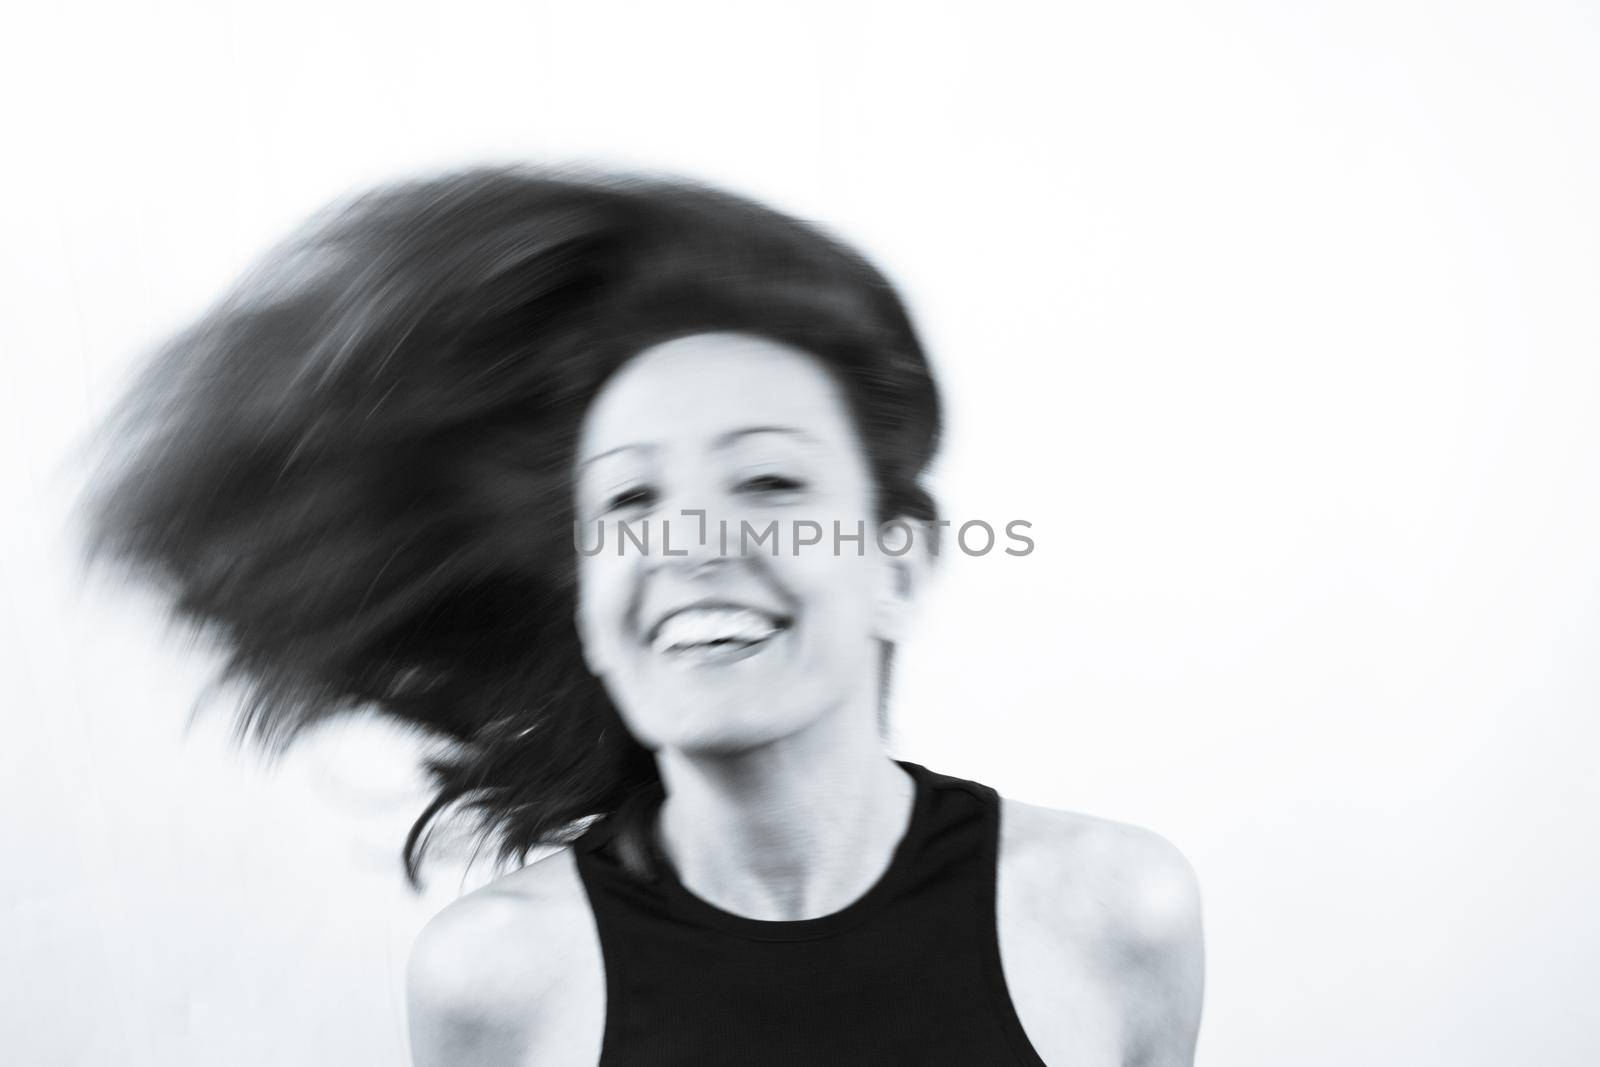 Motion blur portrait of woman over 40. Black tshirt